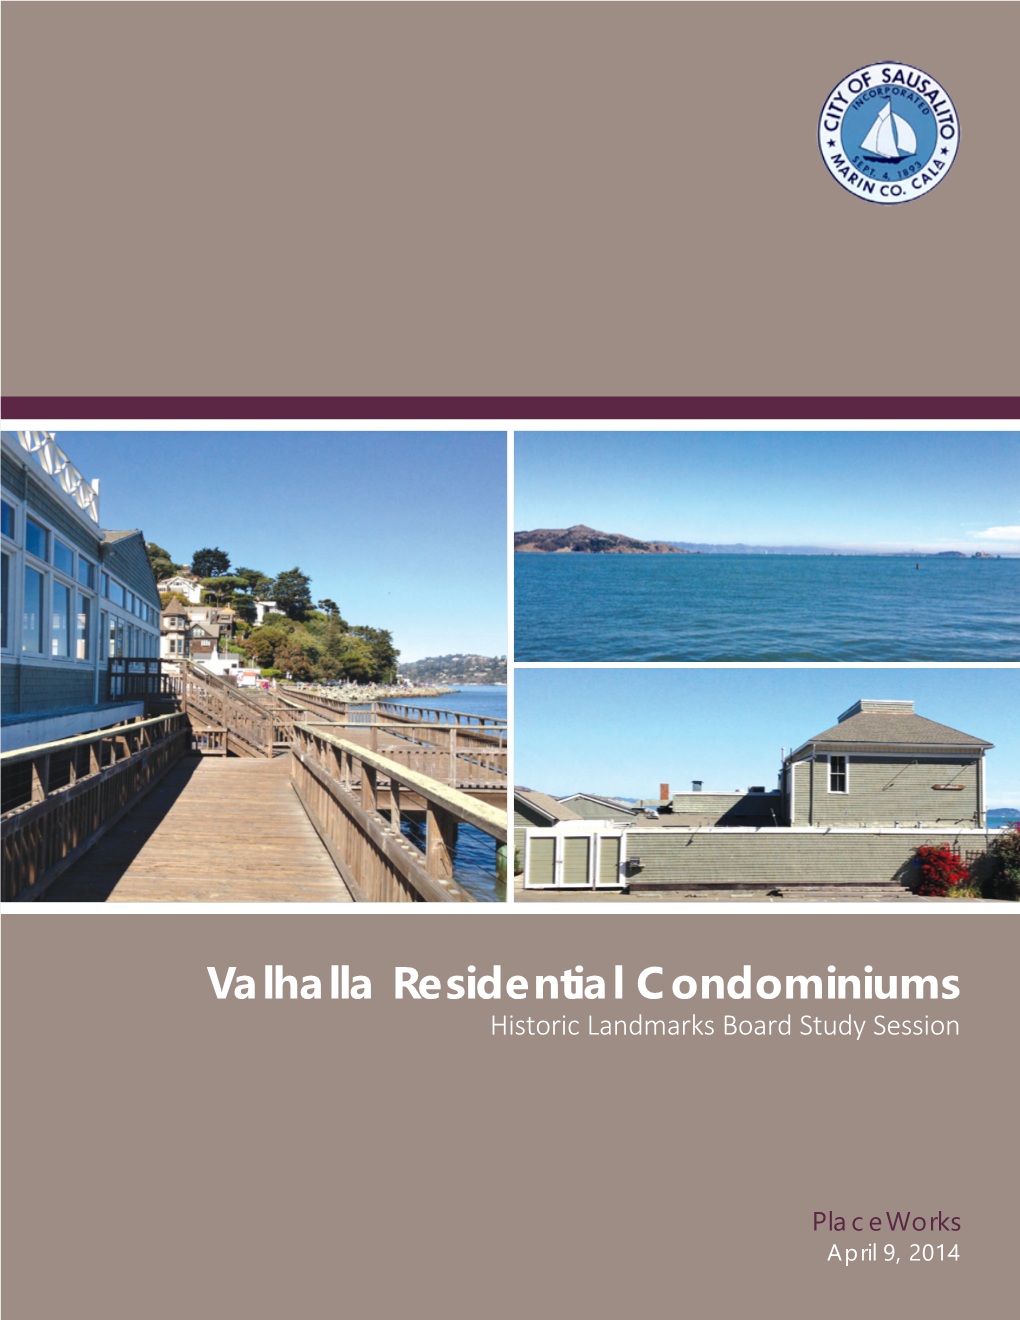 Valhalla Residential Condominiums Historic Landmarks Board Study Session